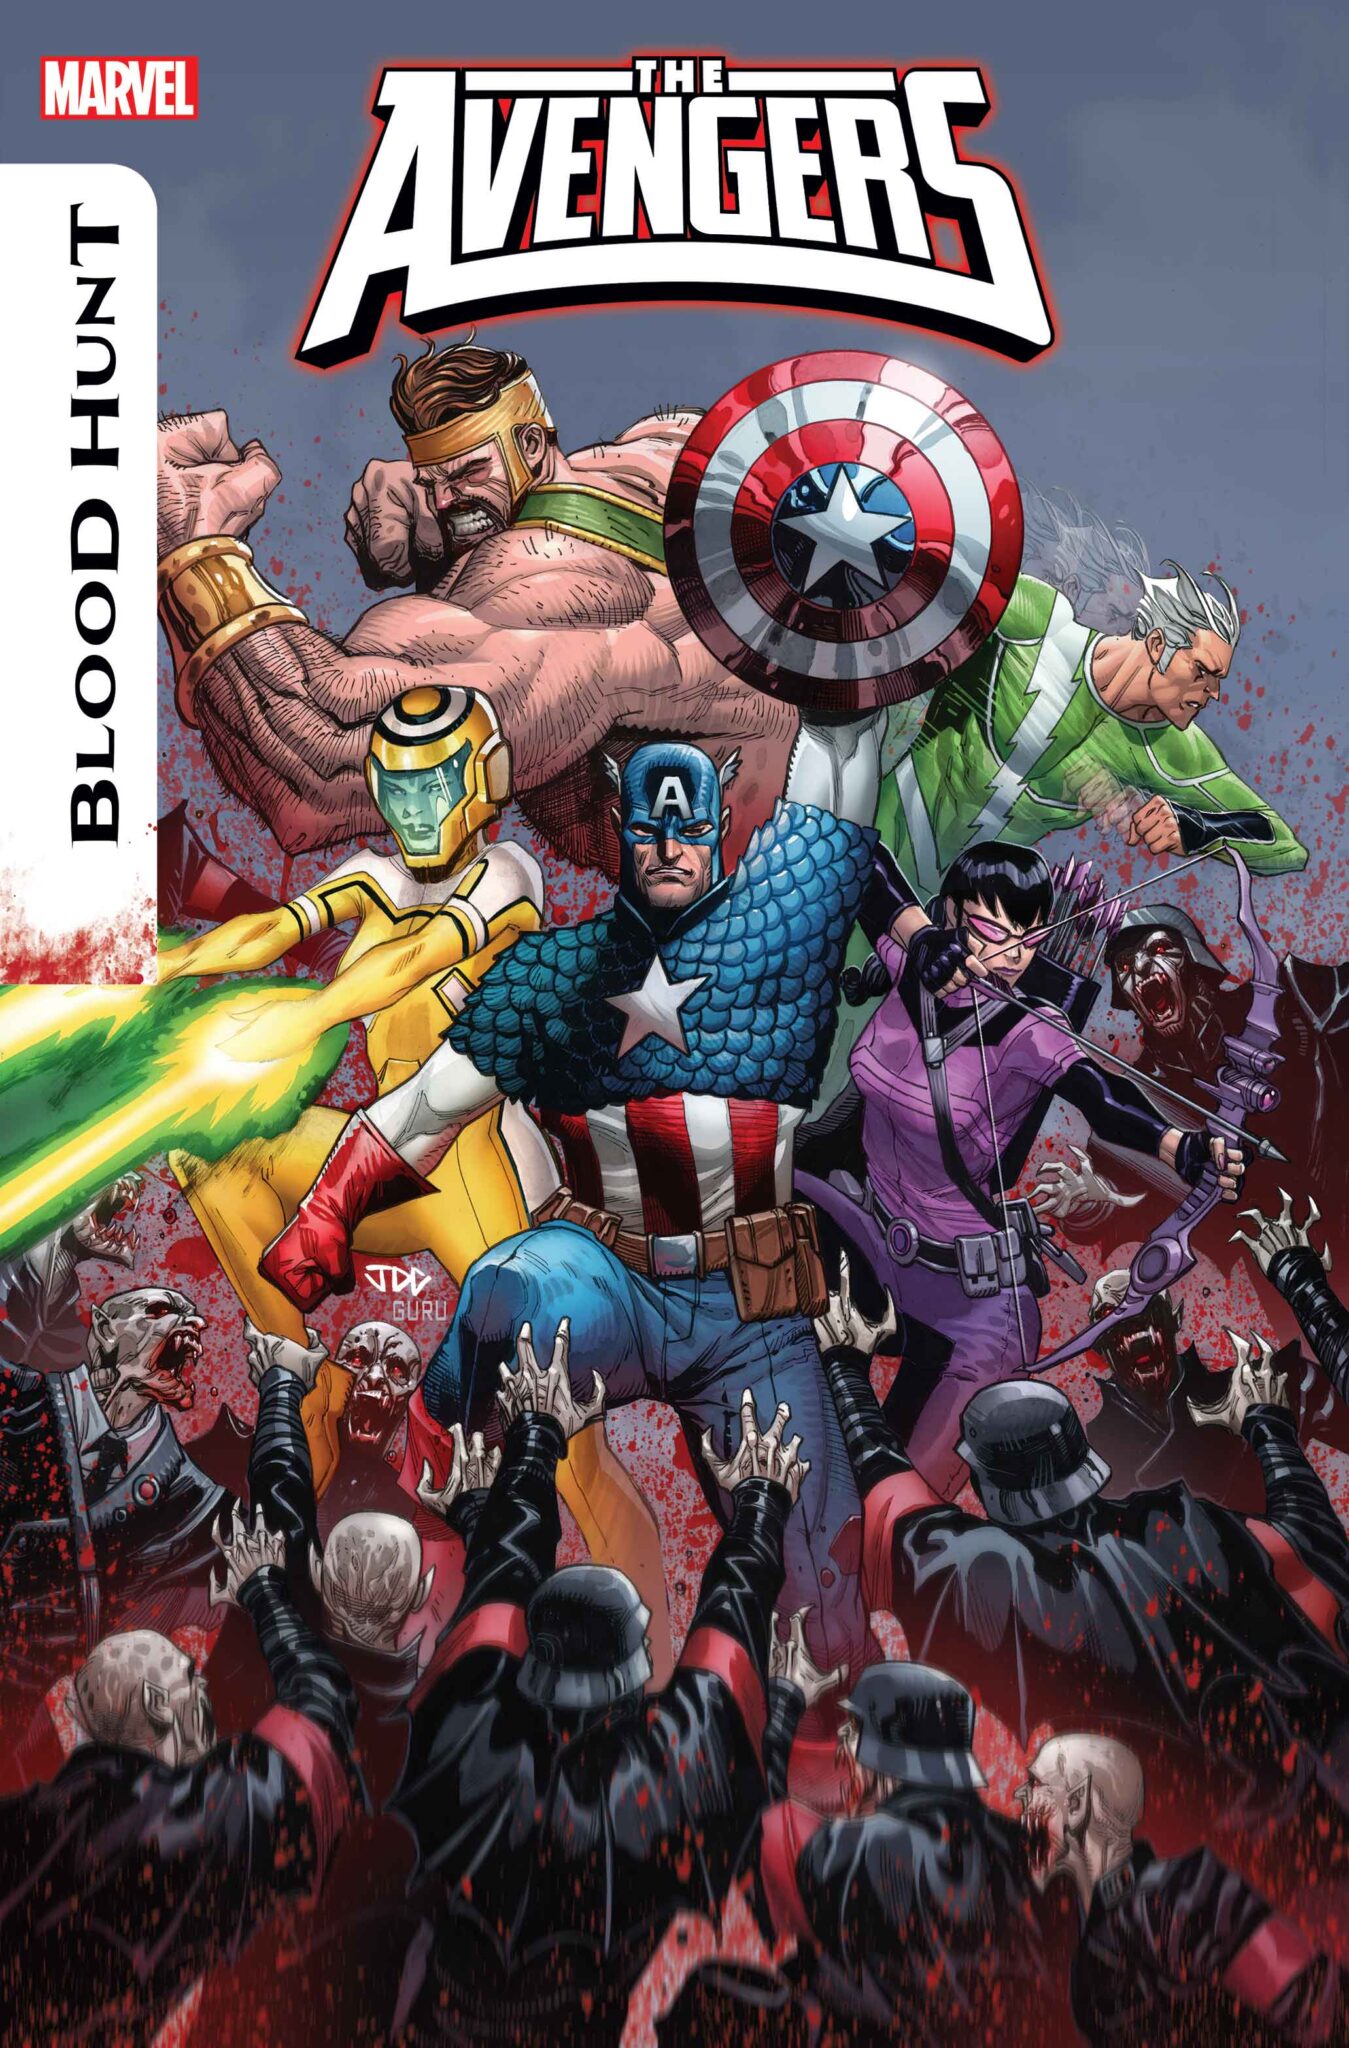 Avengers #14 Blood Hunt cover